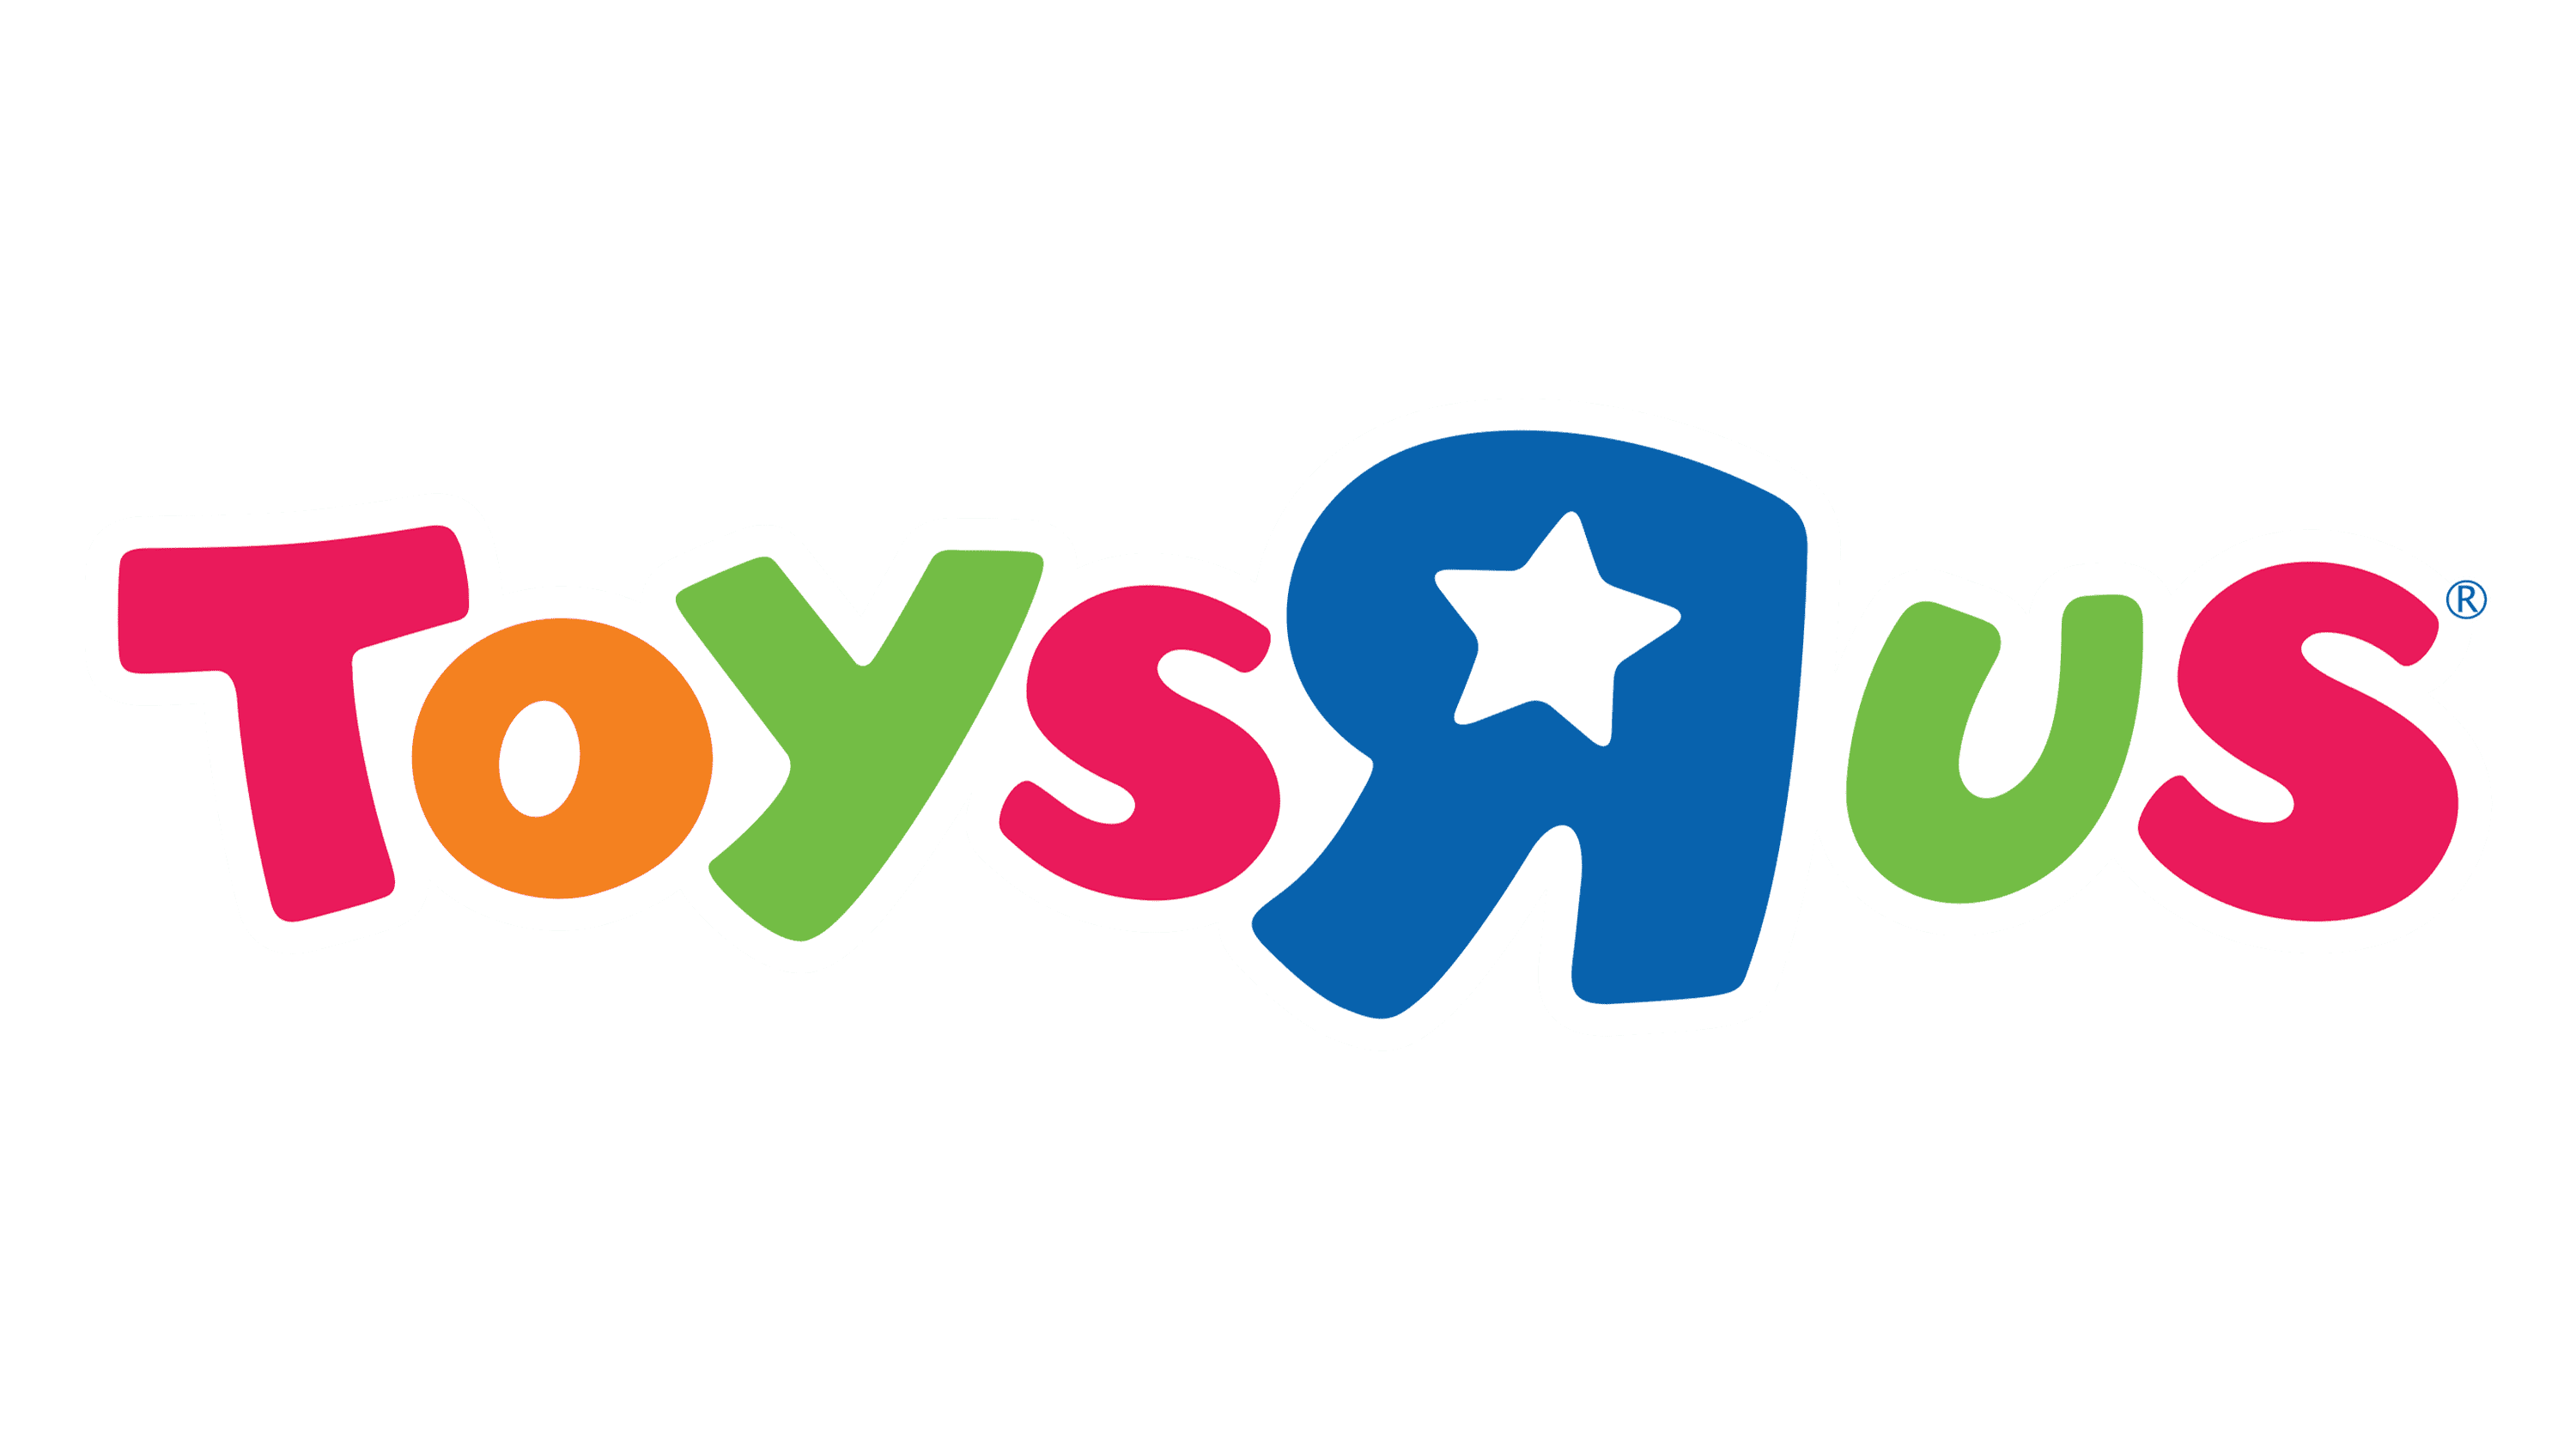 Toys ‘R’ Us Logo Logo